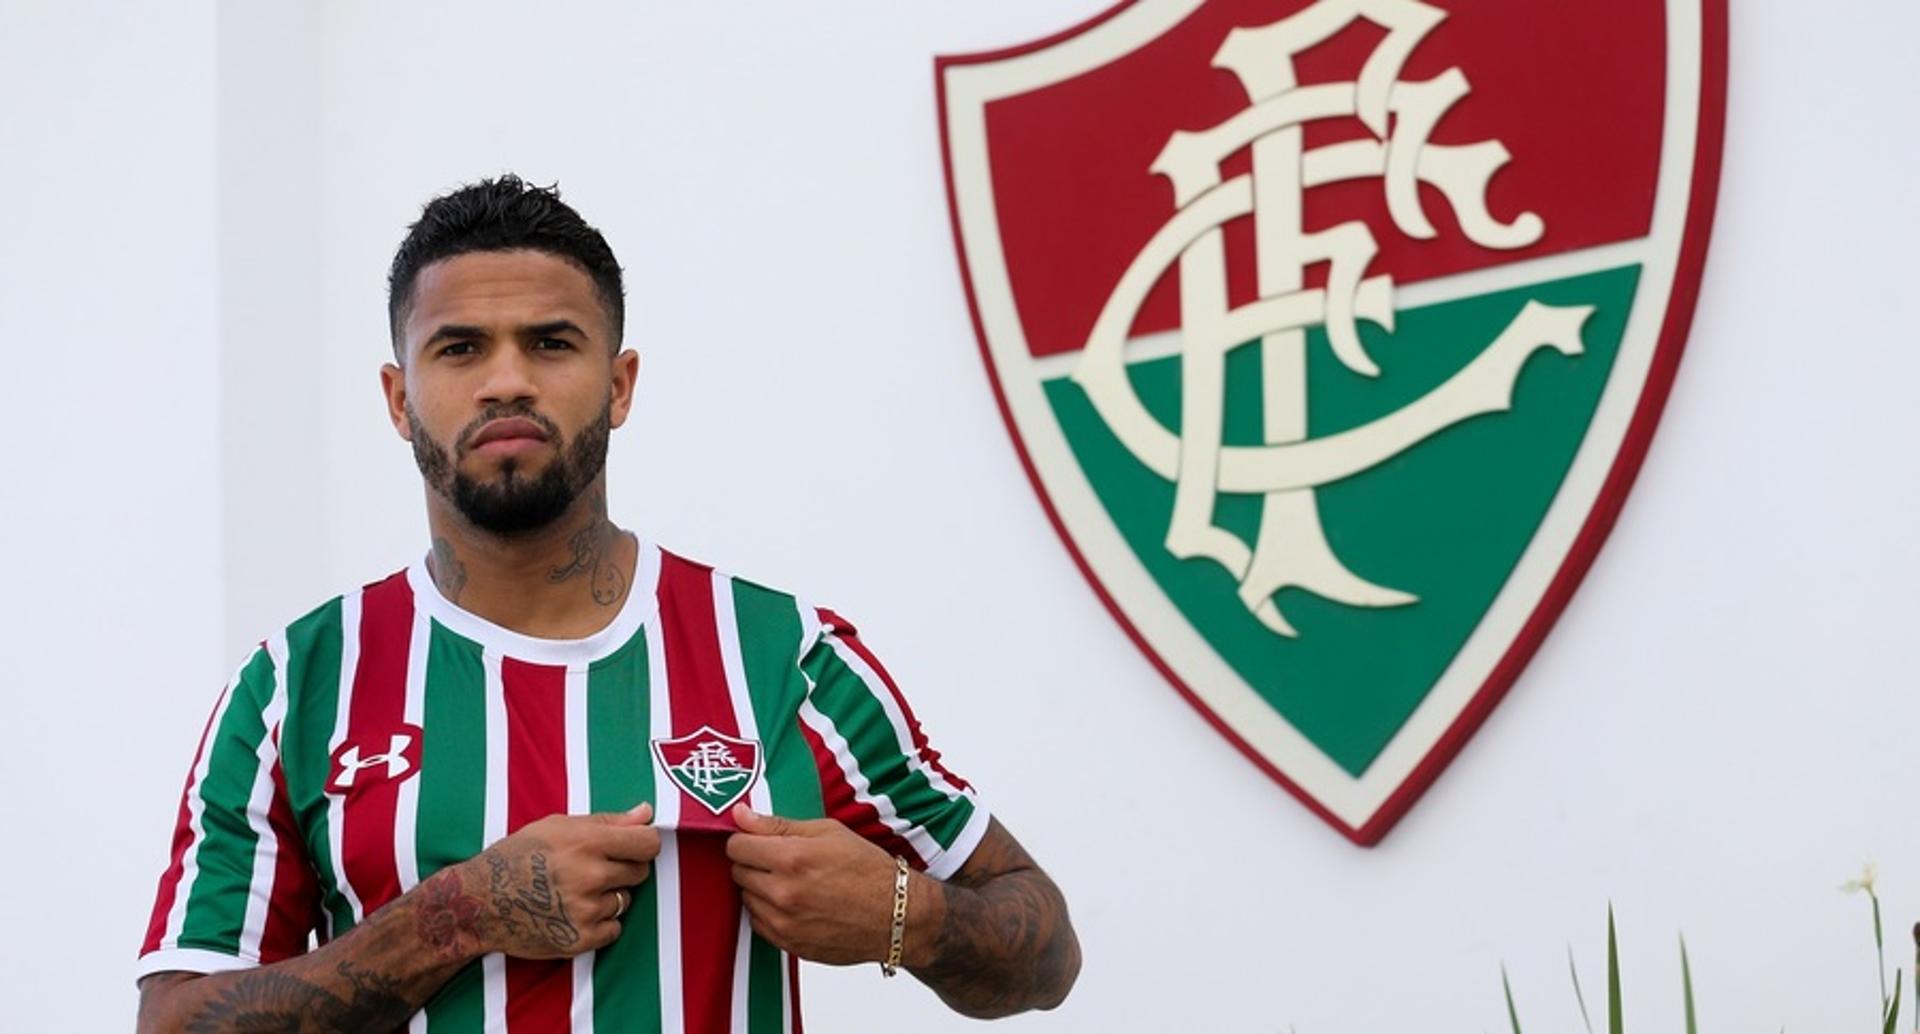 Léo vestirá a camisa 33 no Fluminense